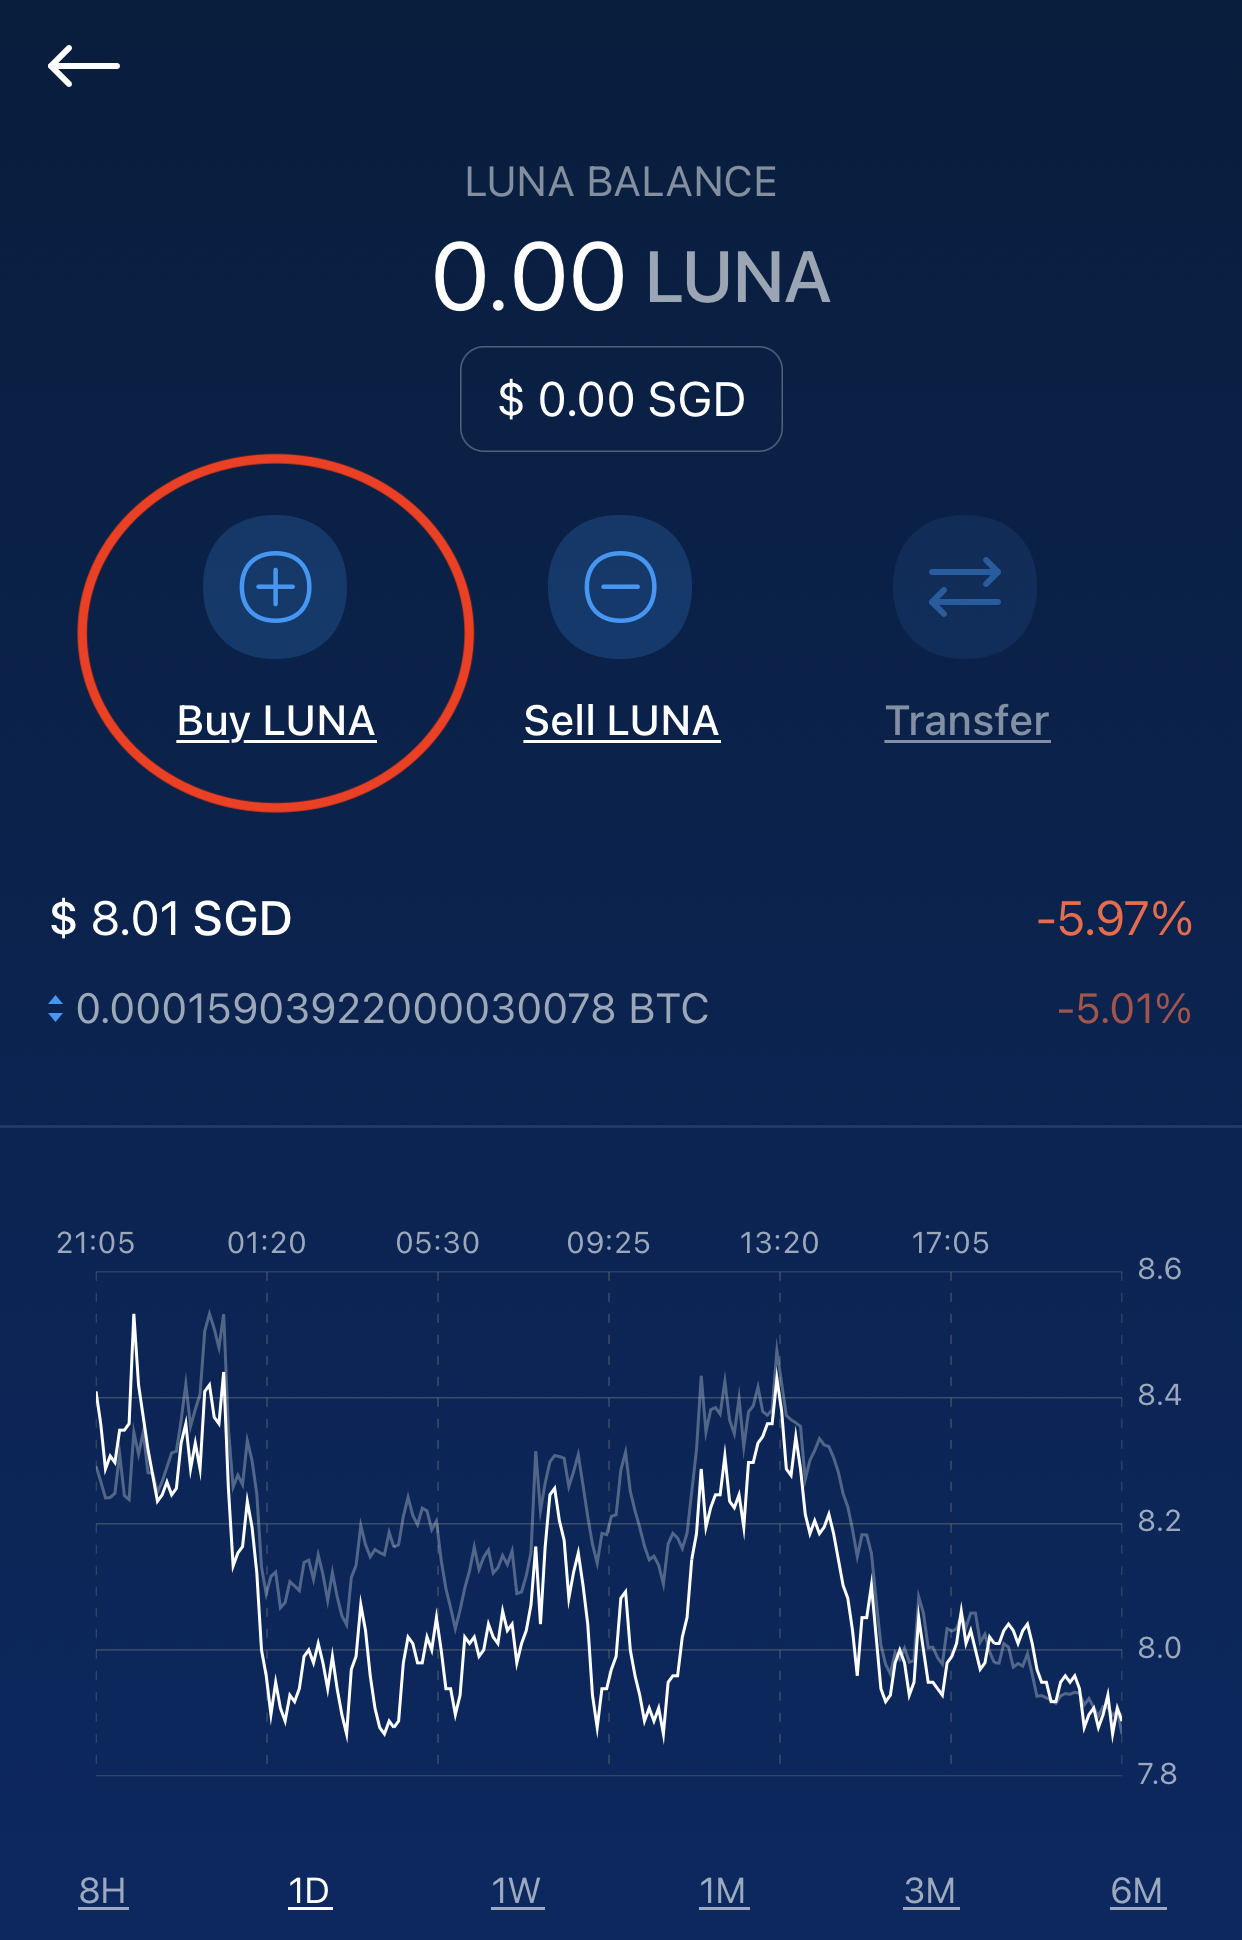 why i cant buy luna on crypto com